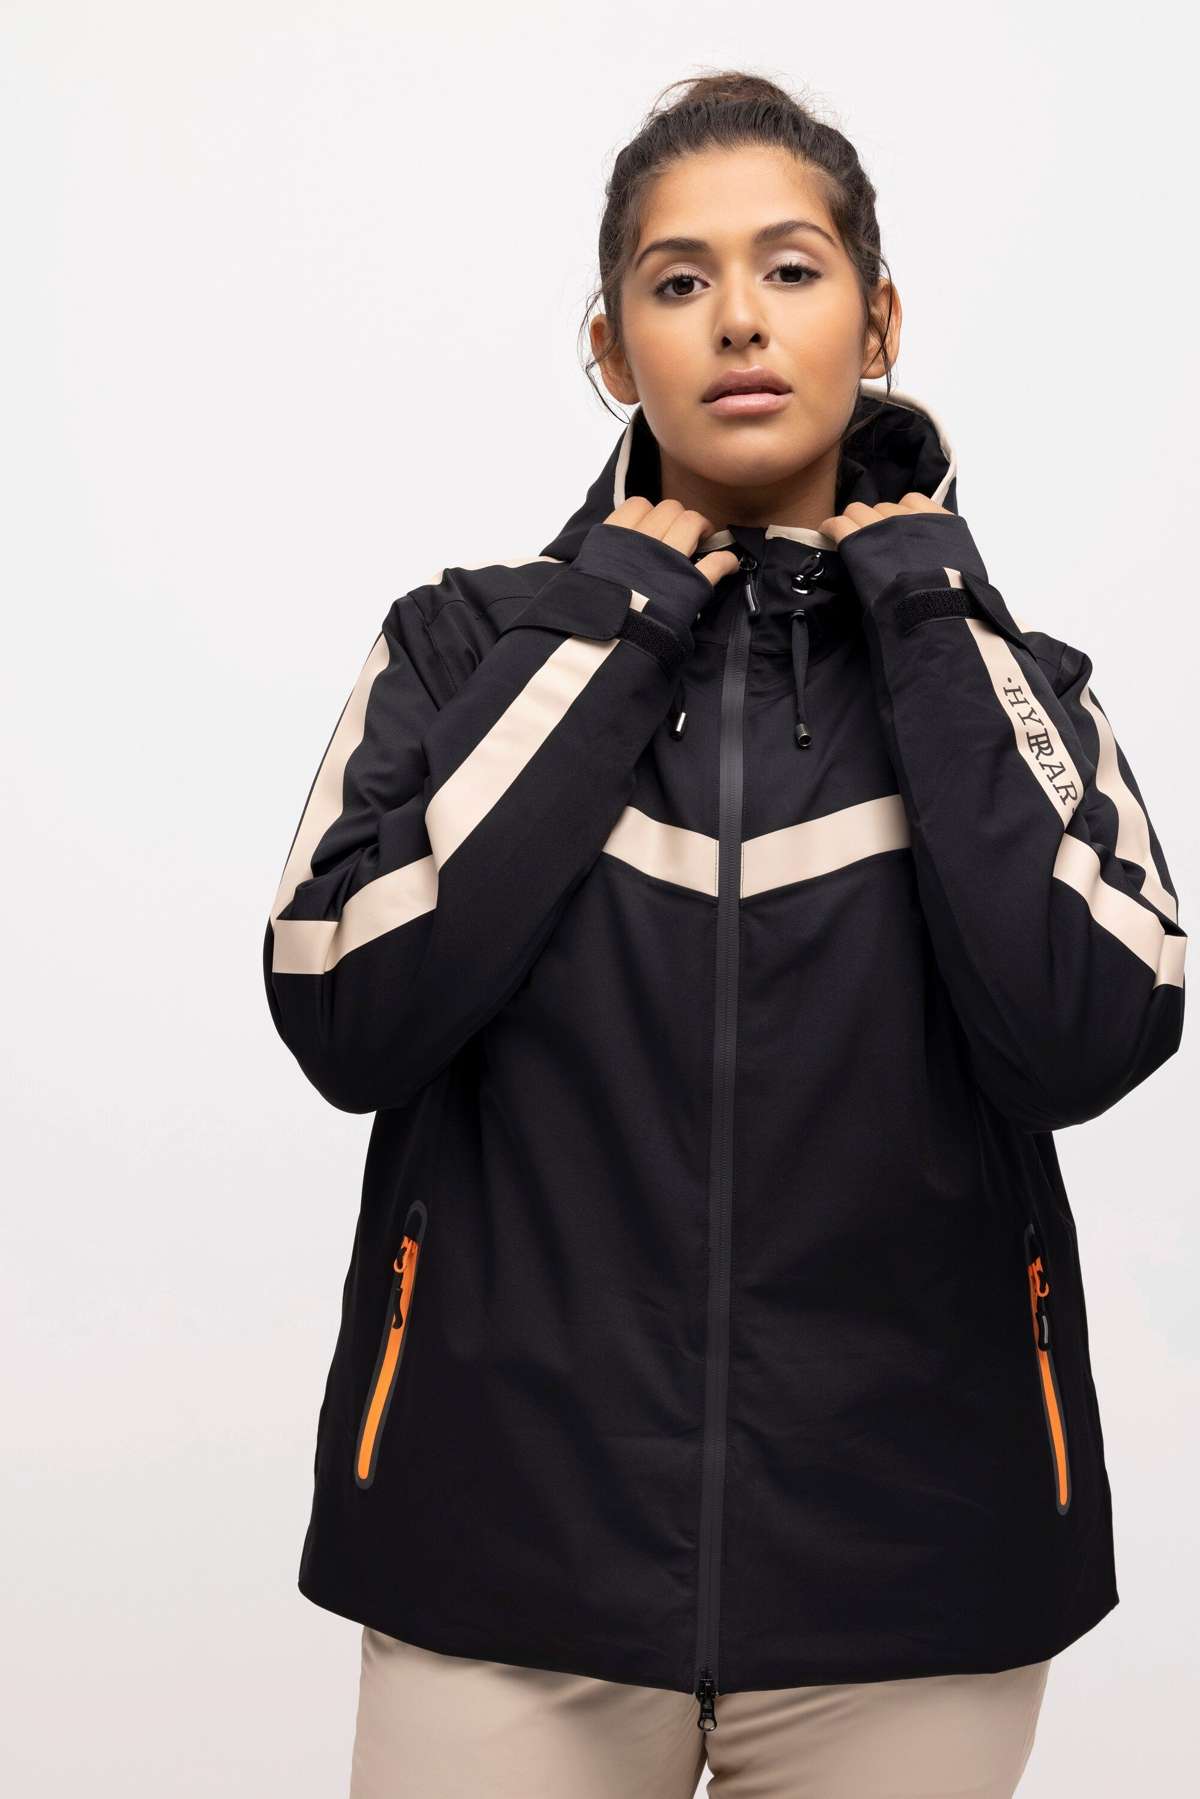 Функциональная куртка HYPRAR Performance куртка эластичная и водонепроницаемая